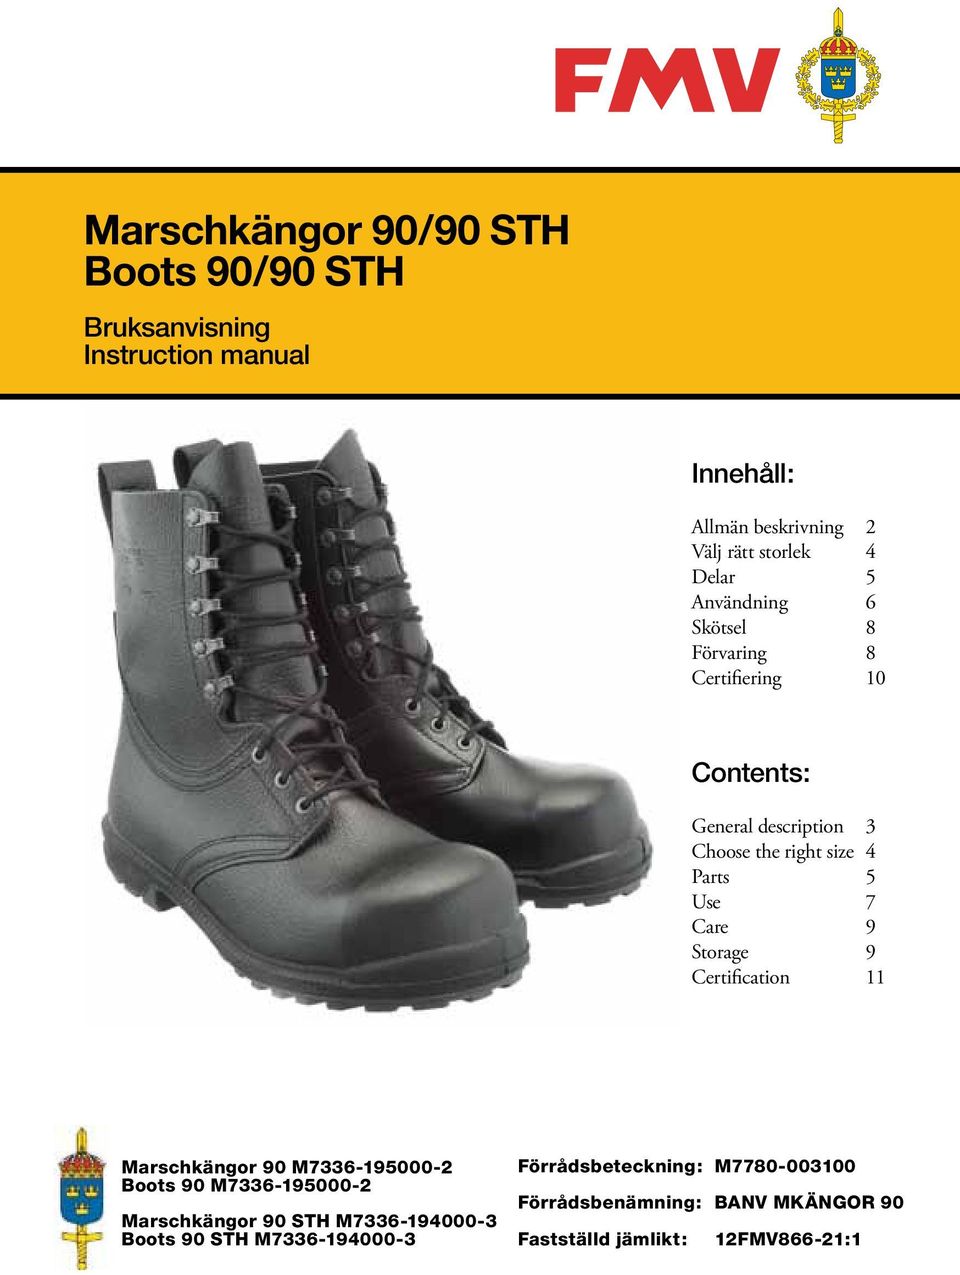 Marschkängor 90/90 STH Boots 90/90 STH - PDF Free Download